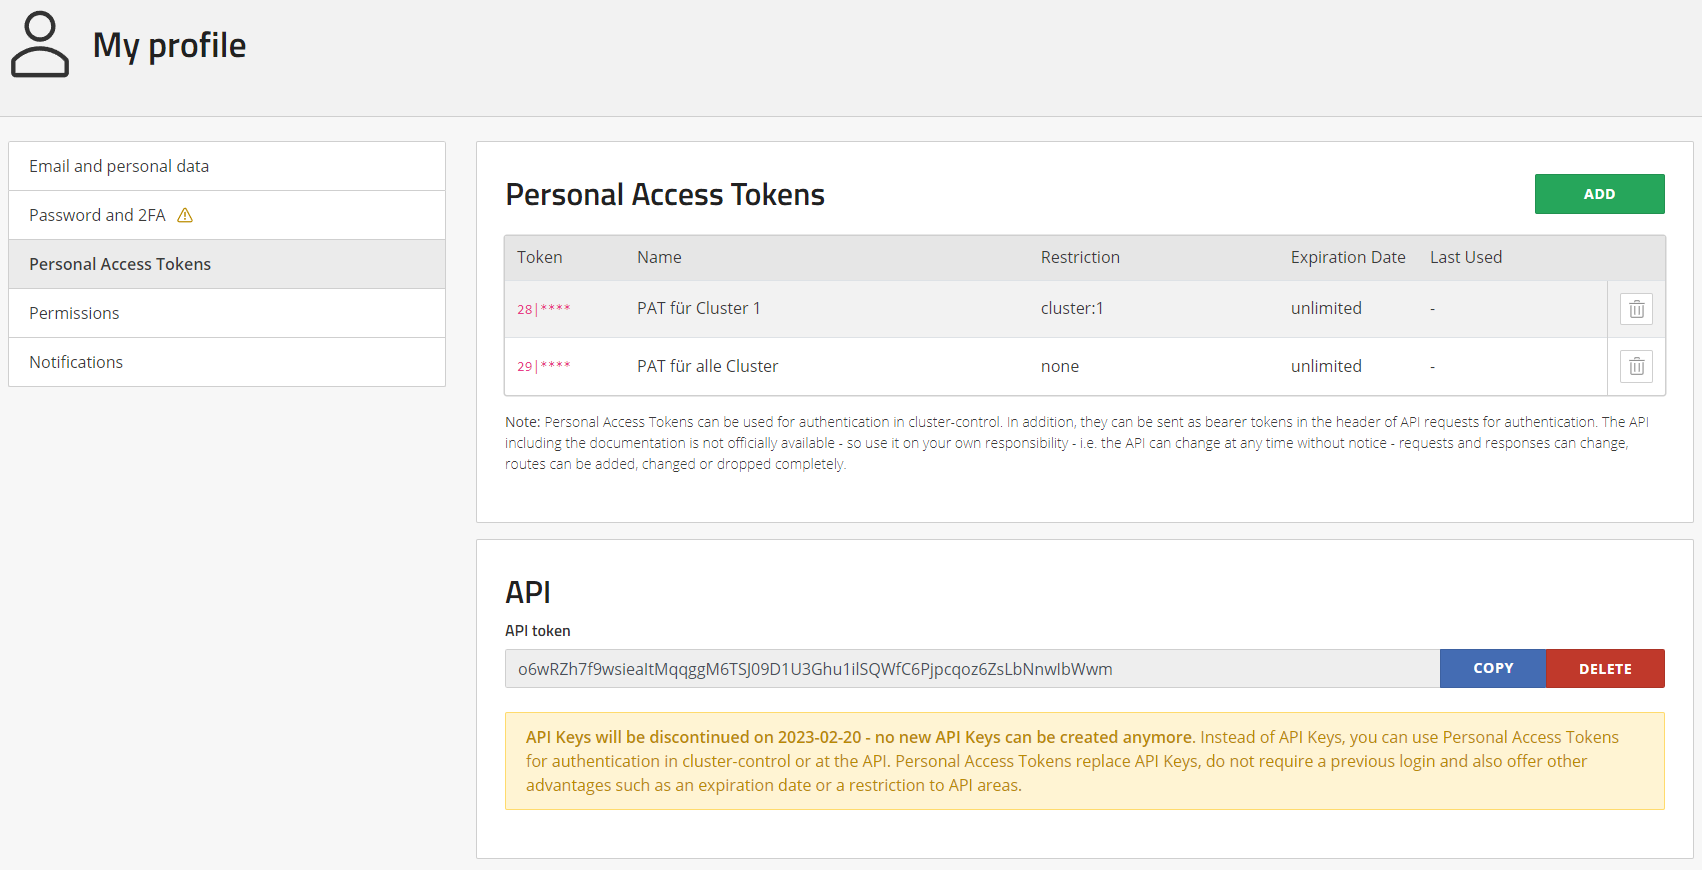 Personal Access Token under "My Data"